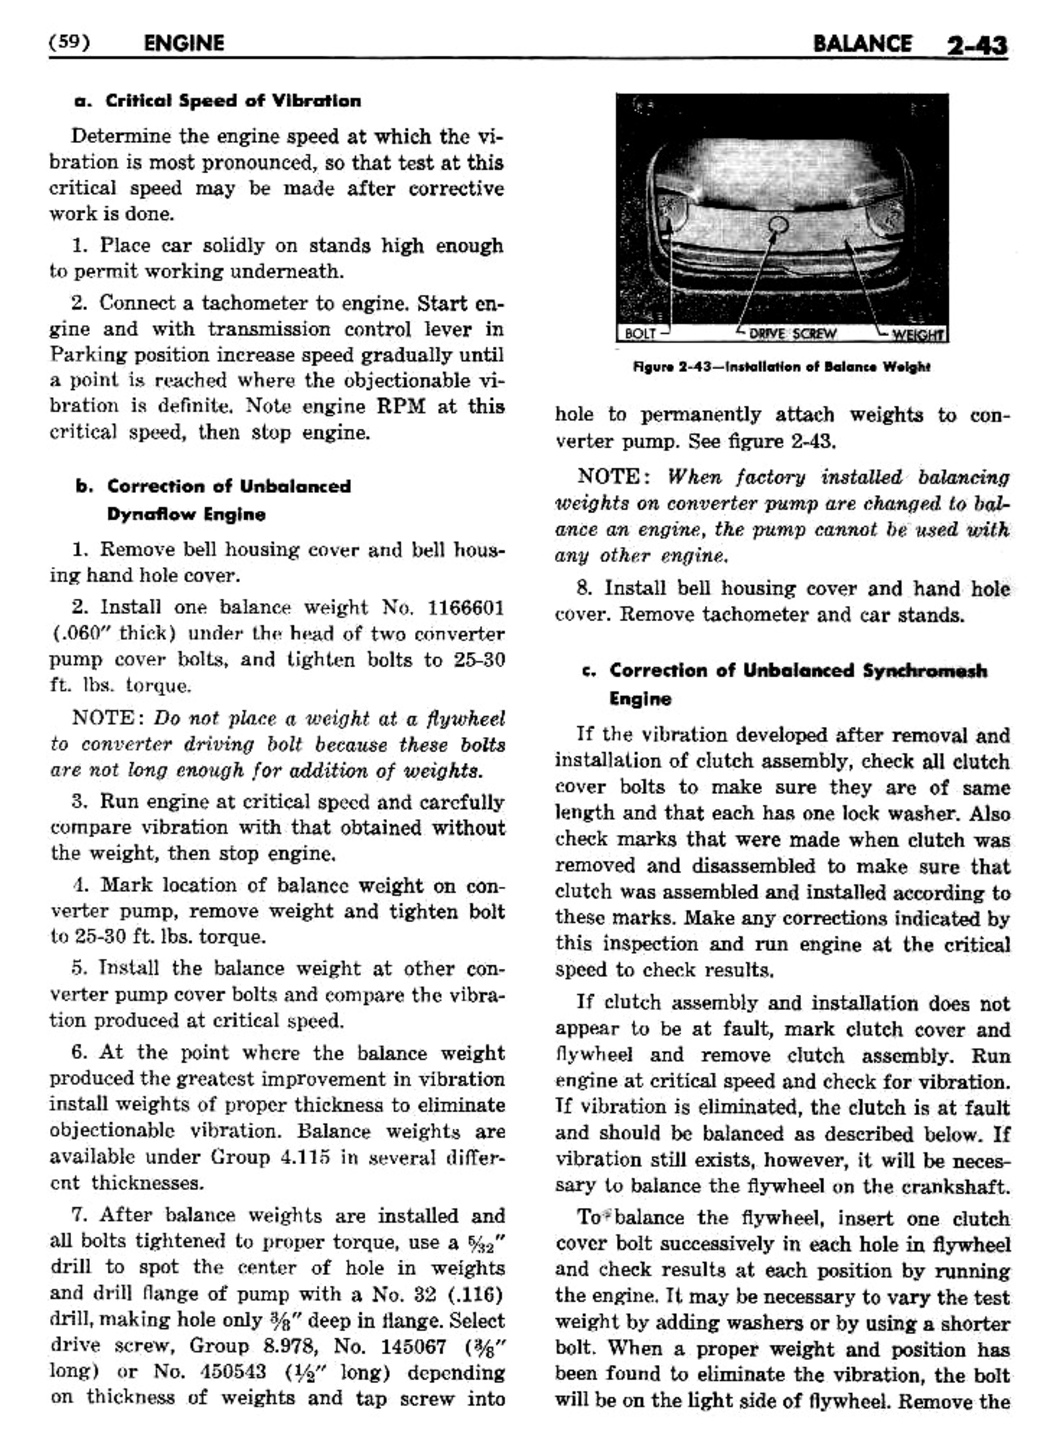 n_03 1955 Buick Shop Manual - Engine-043-043.jpg